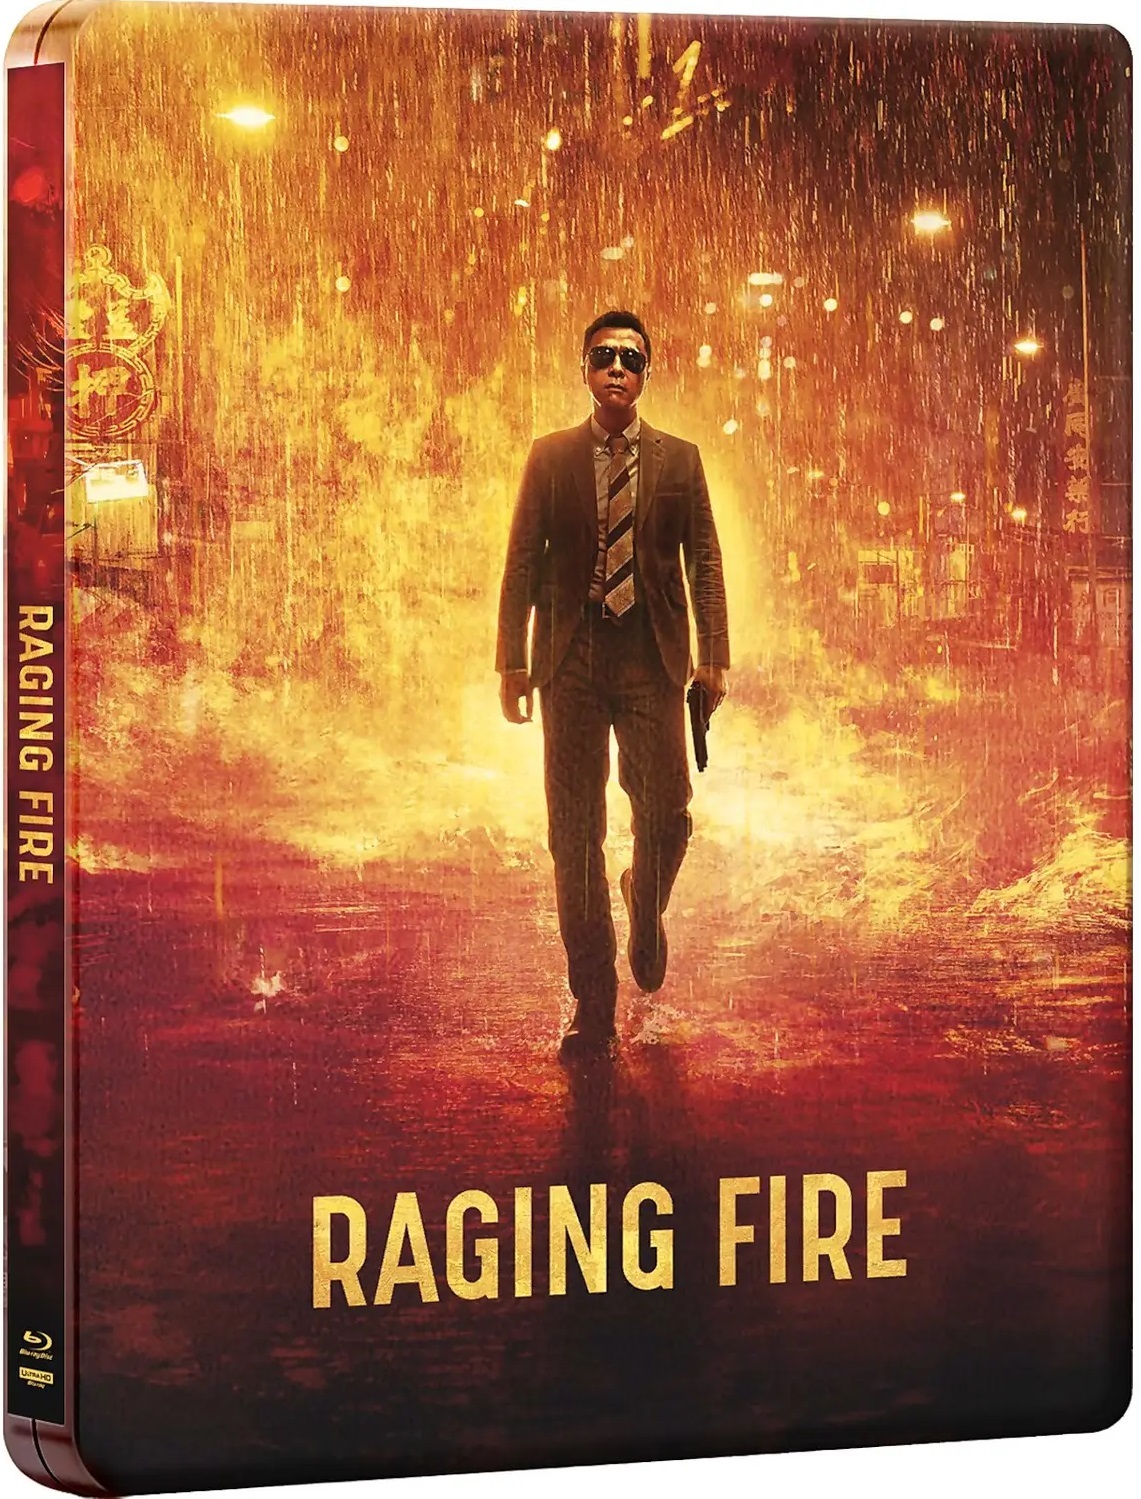 Movie watch raging fire online full Watch Raging